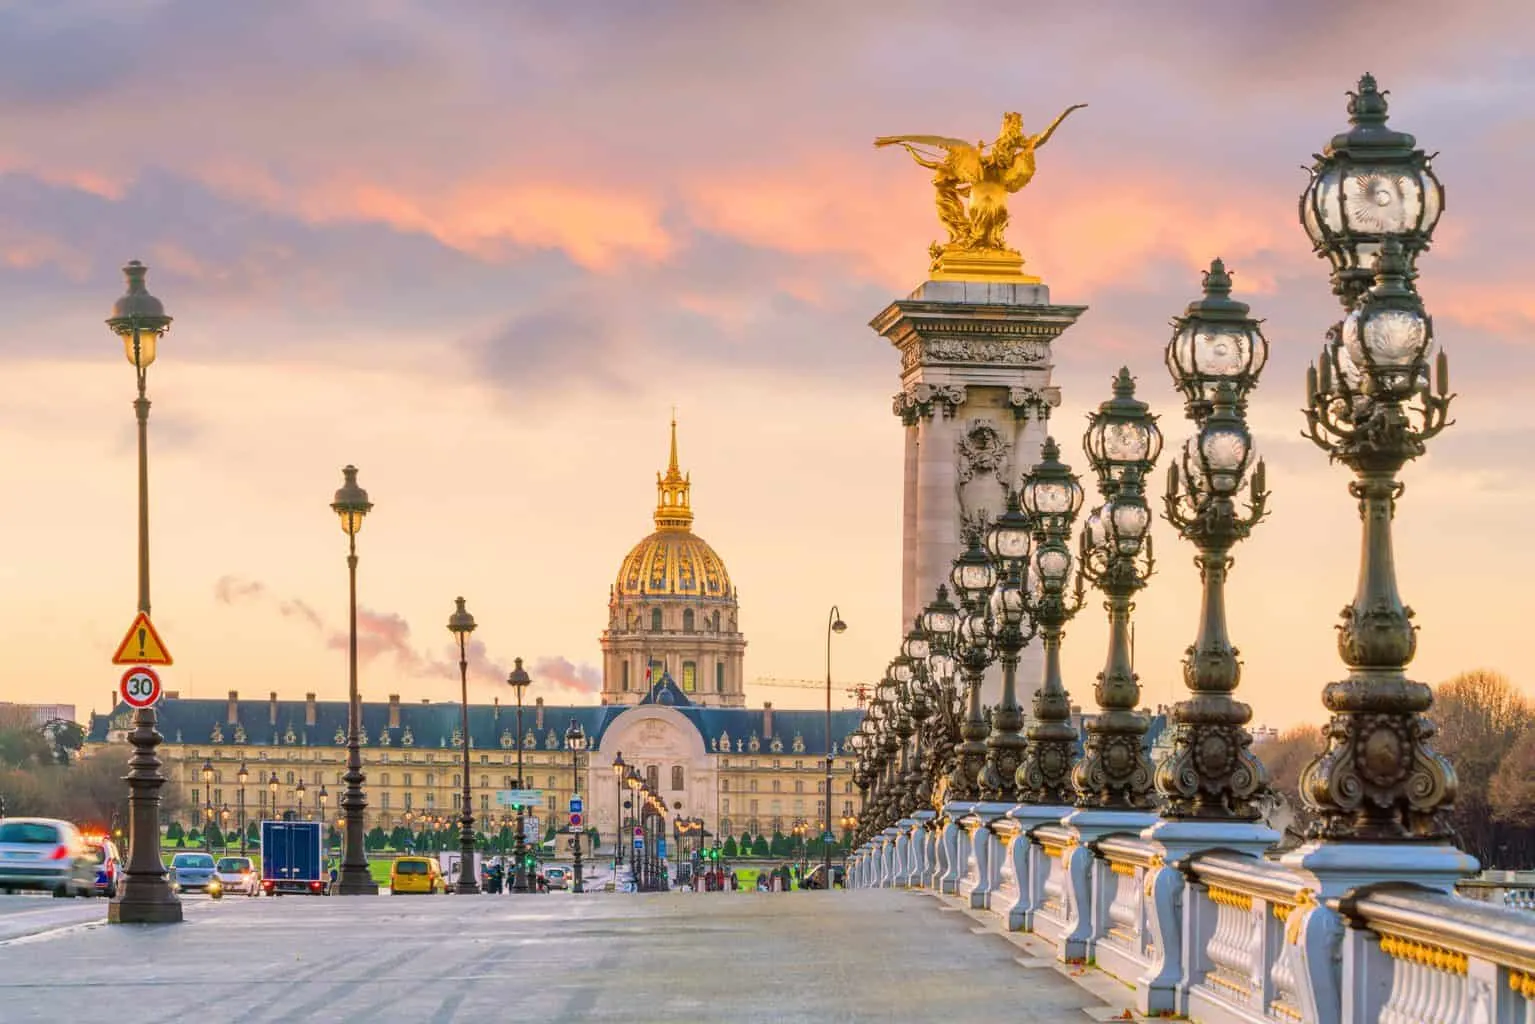 Paris' immortal, Charles III bridge, which spans across the Seine.